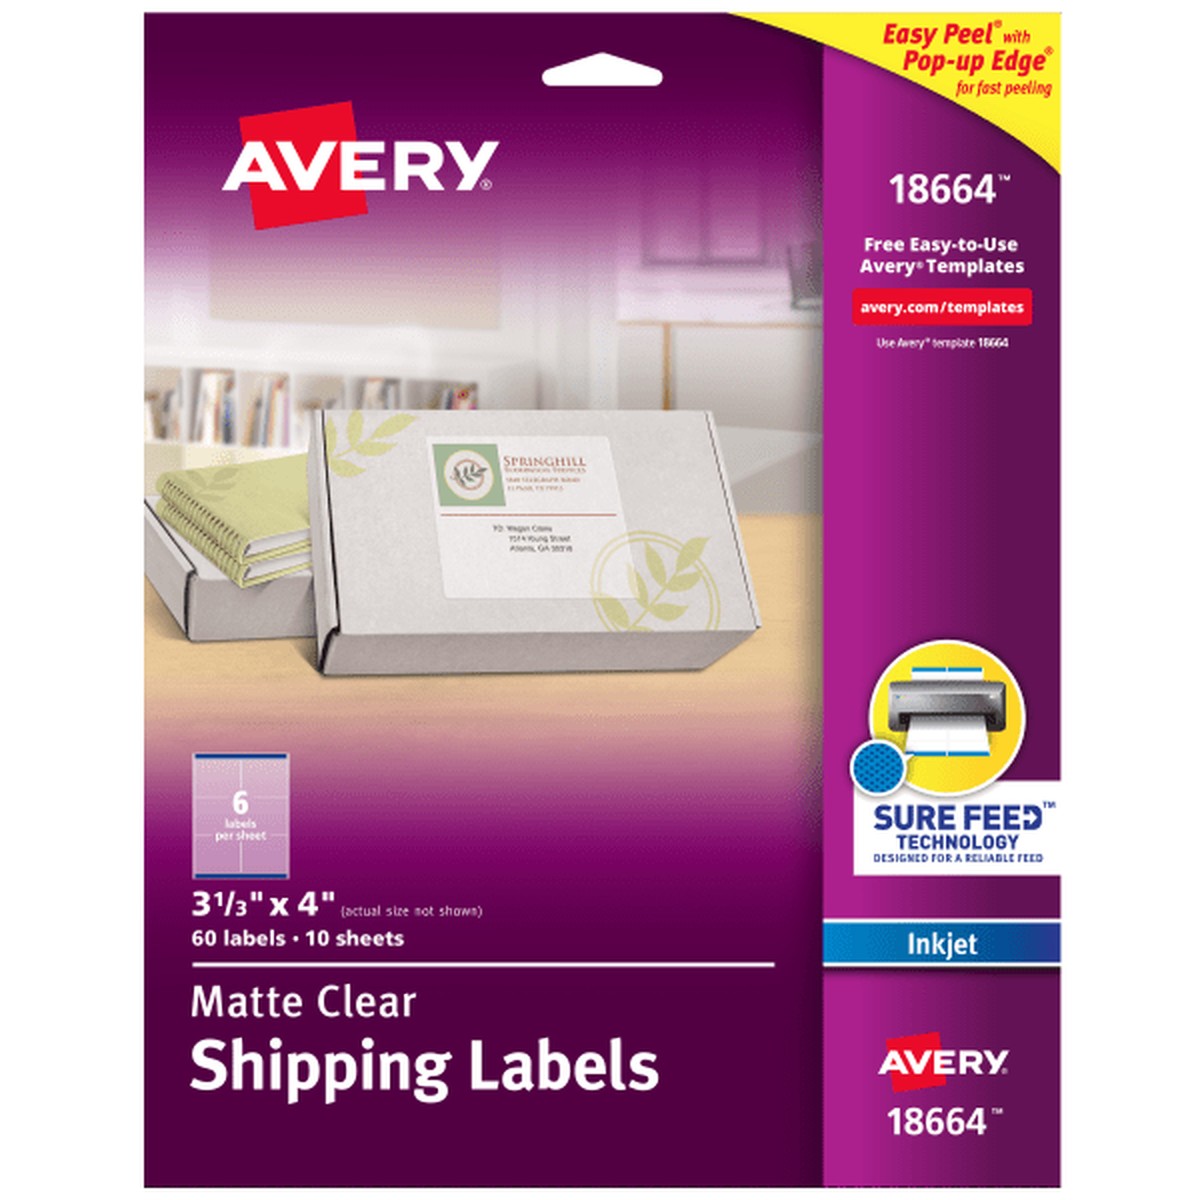 Avery Easy Peel Inkjet Printer Mailing Labels - 3 21/64" Width x 4" Length - Permanent Adhesive - Rectangle - Inkjet - Clea